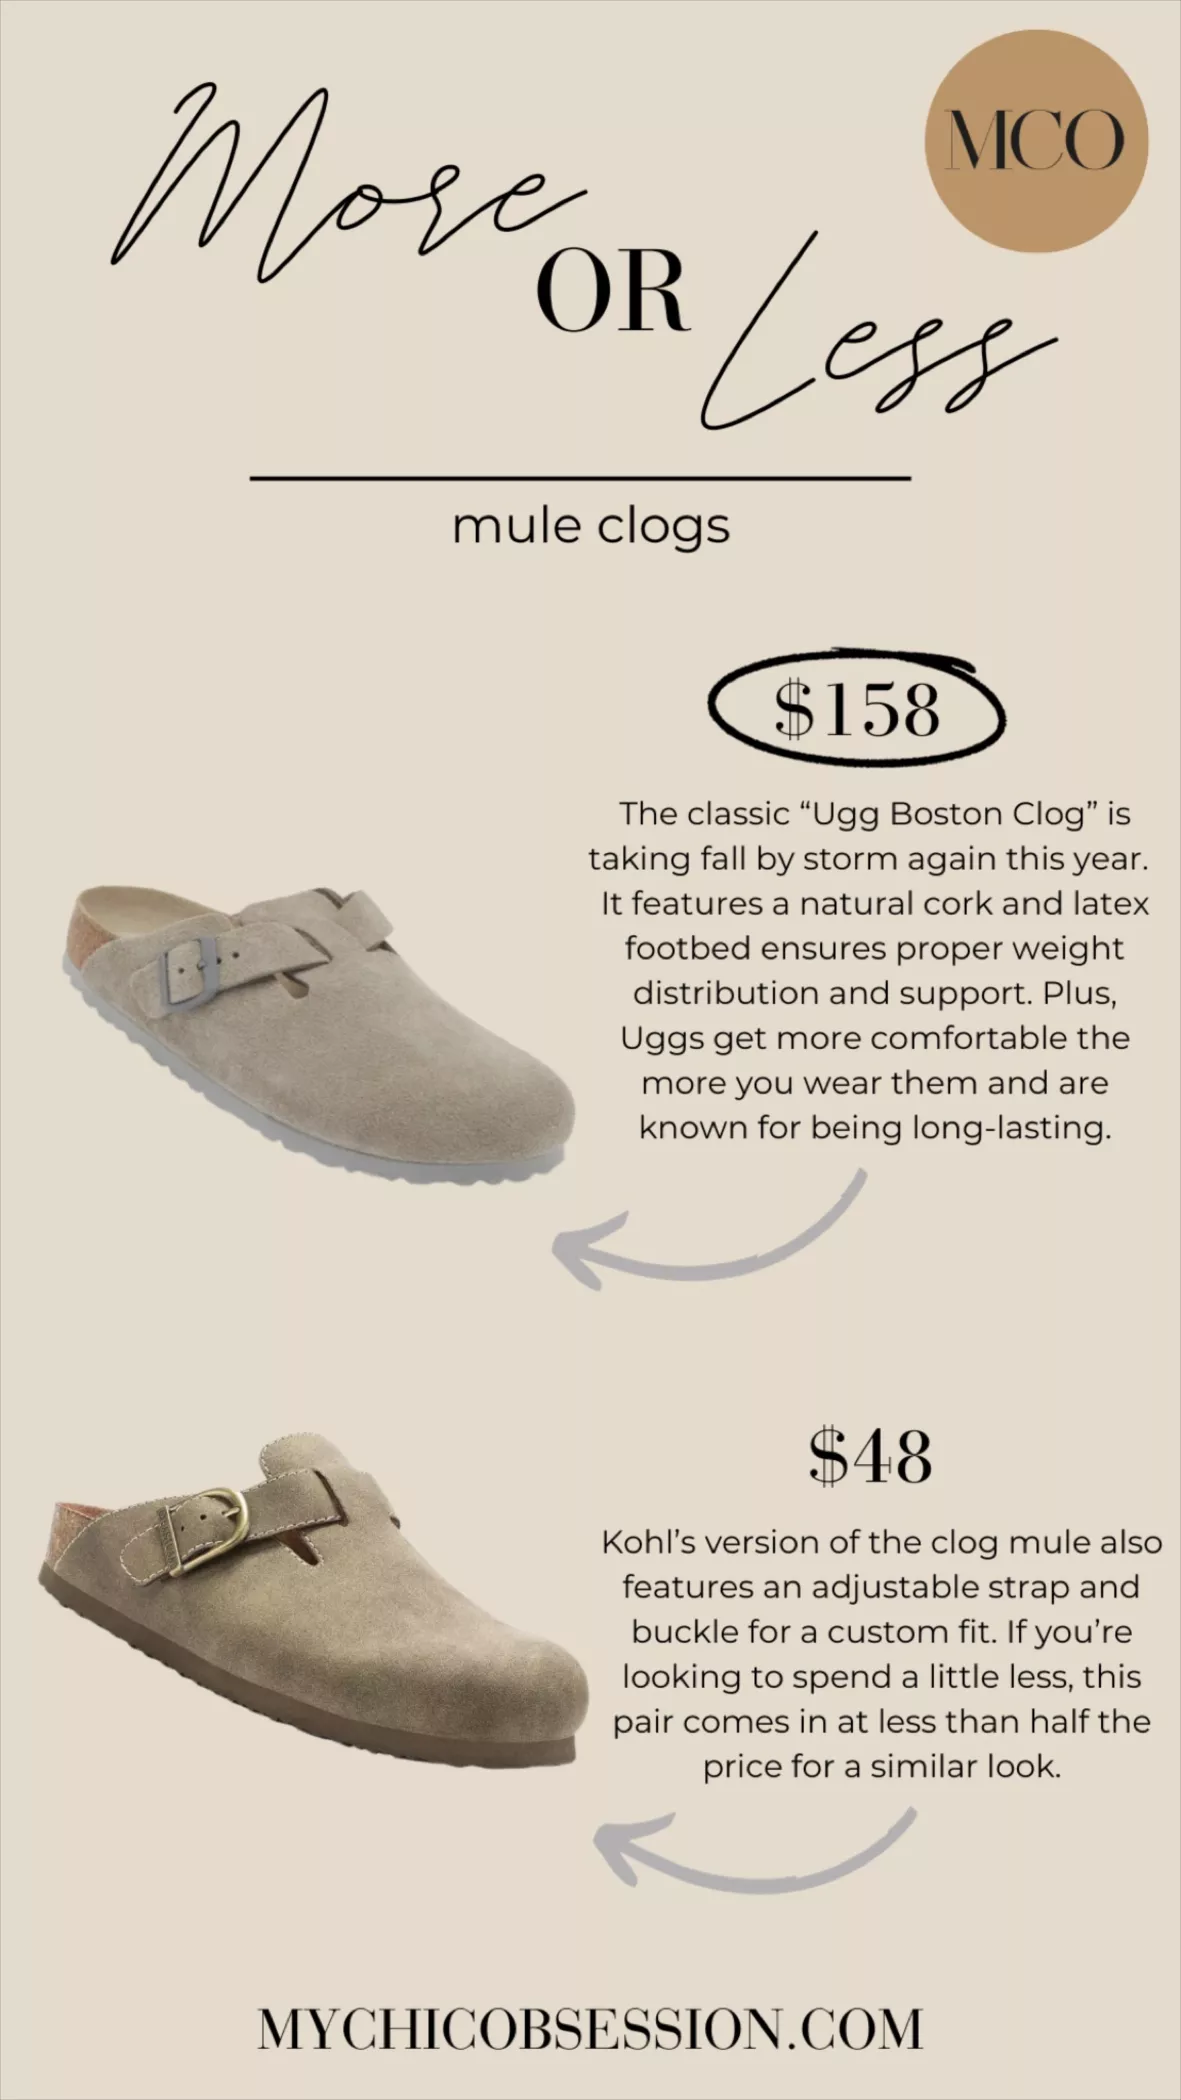 Custom Luxury Birkenstock Sandals curated on LTK